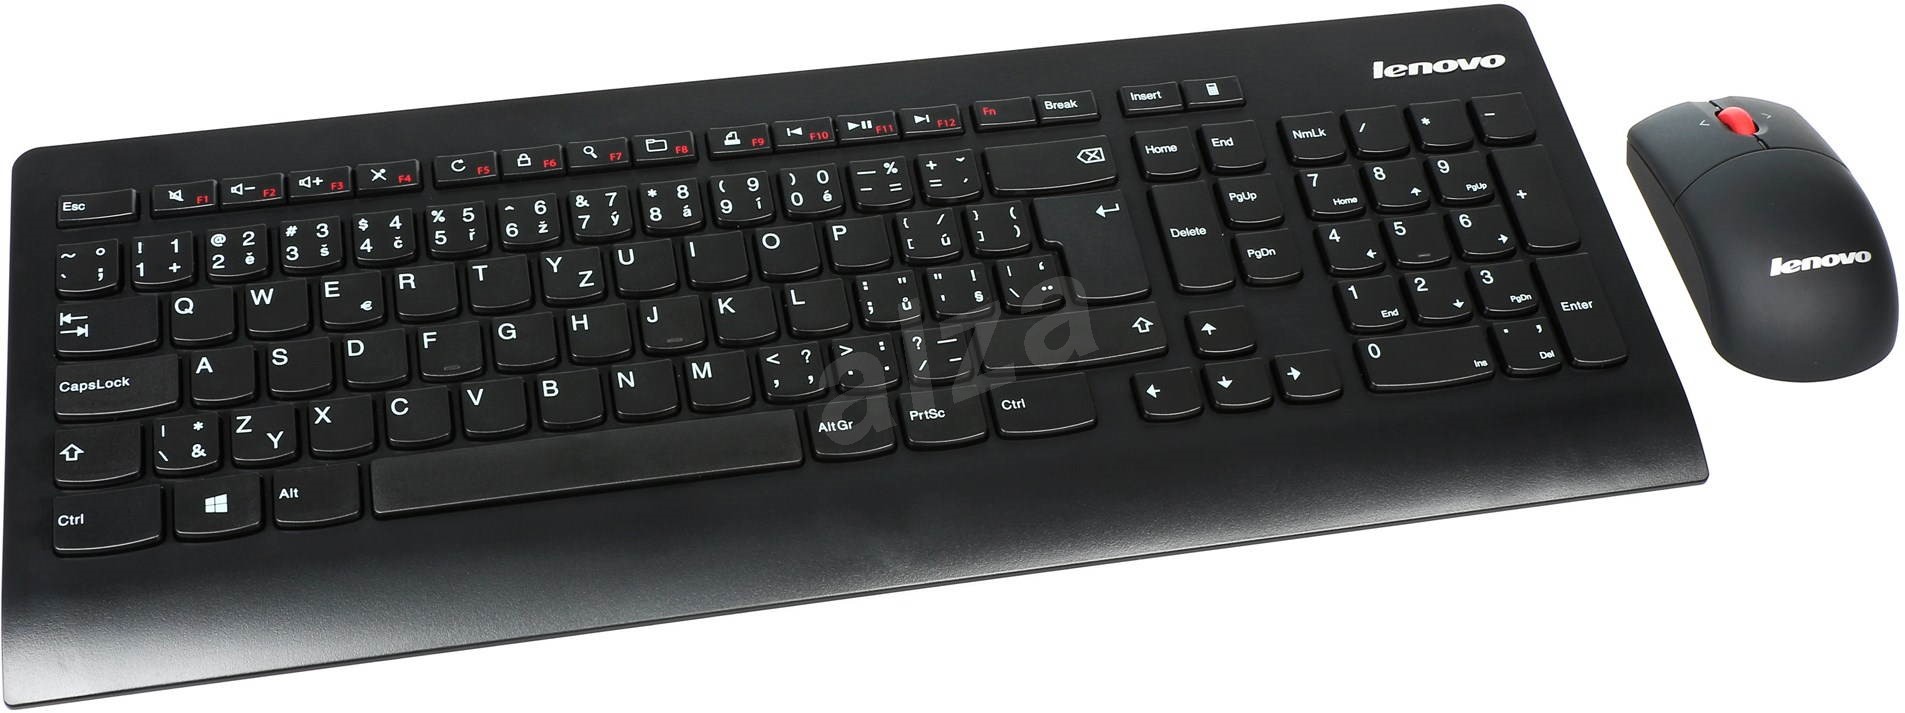 Lenovo ultraslim plus wireless keyboard and mouse